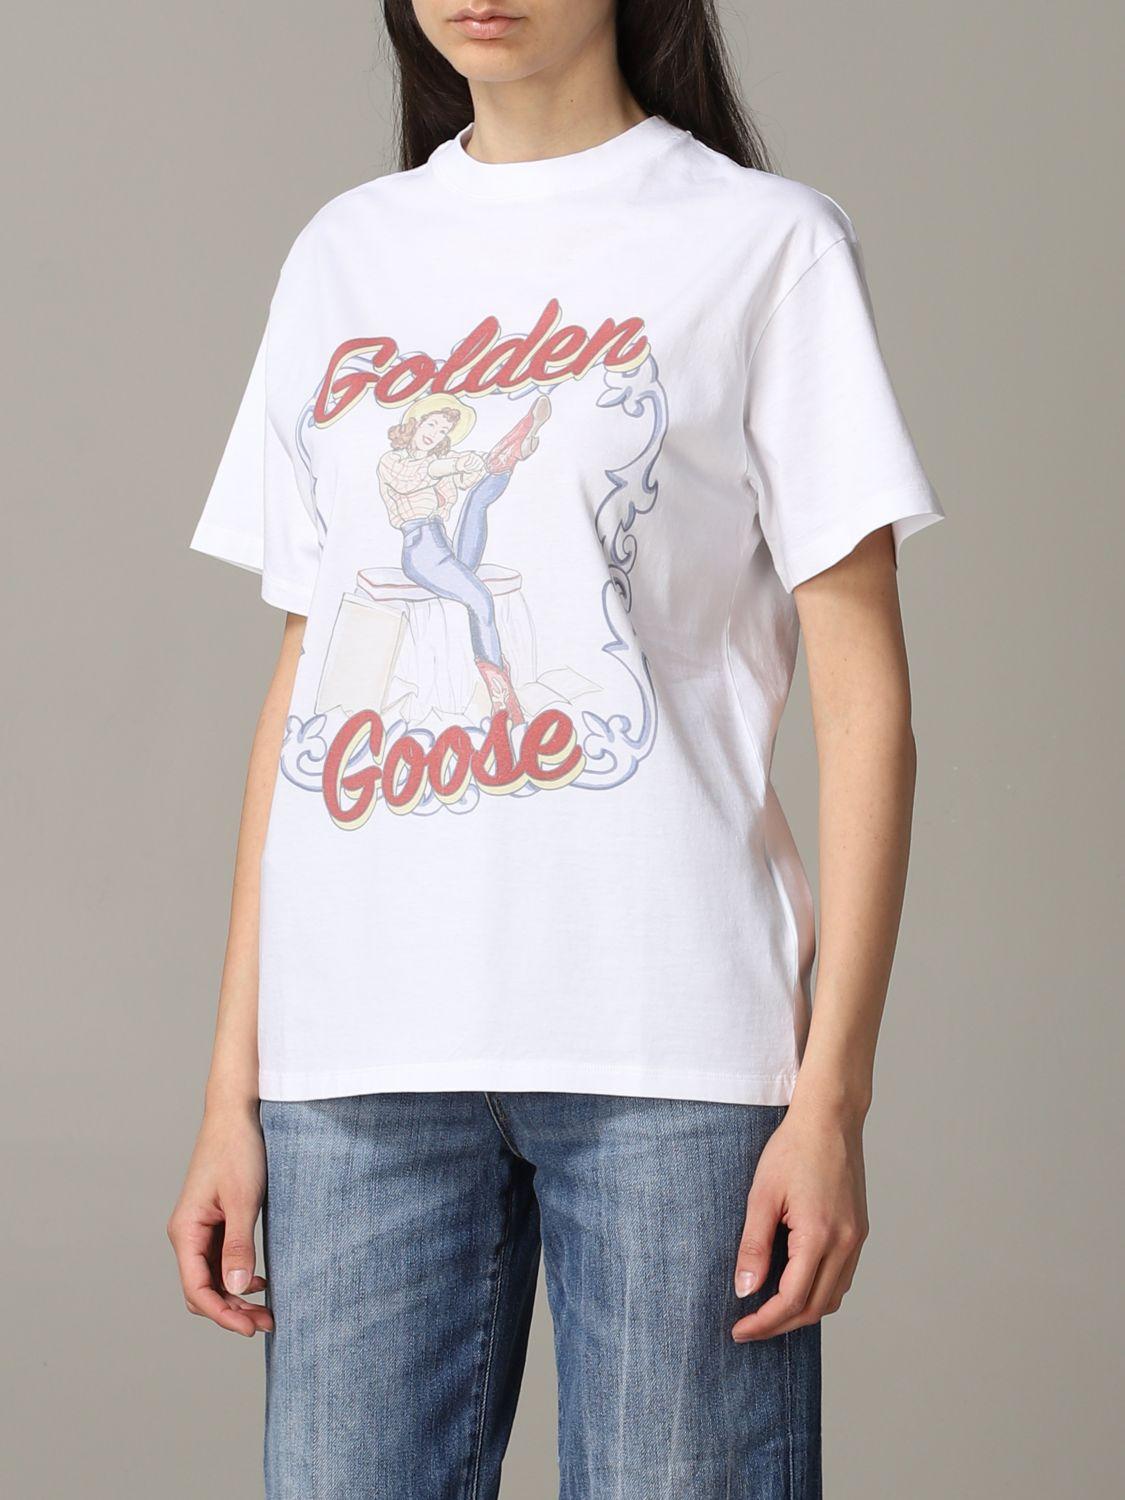 Golden Goose Deluxe Brand T-shirt in White - Lyst